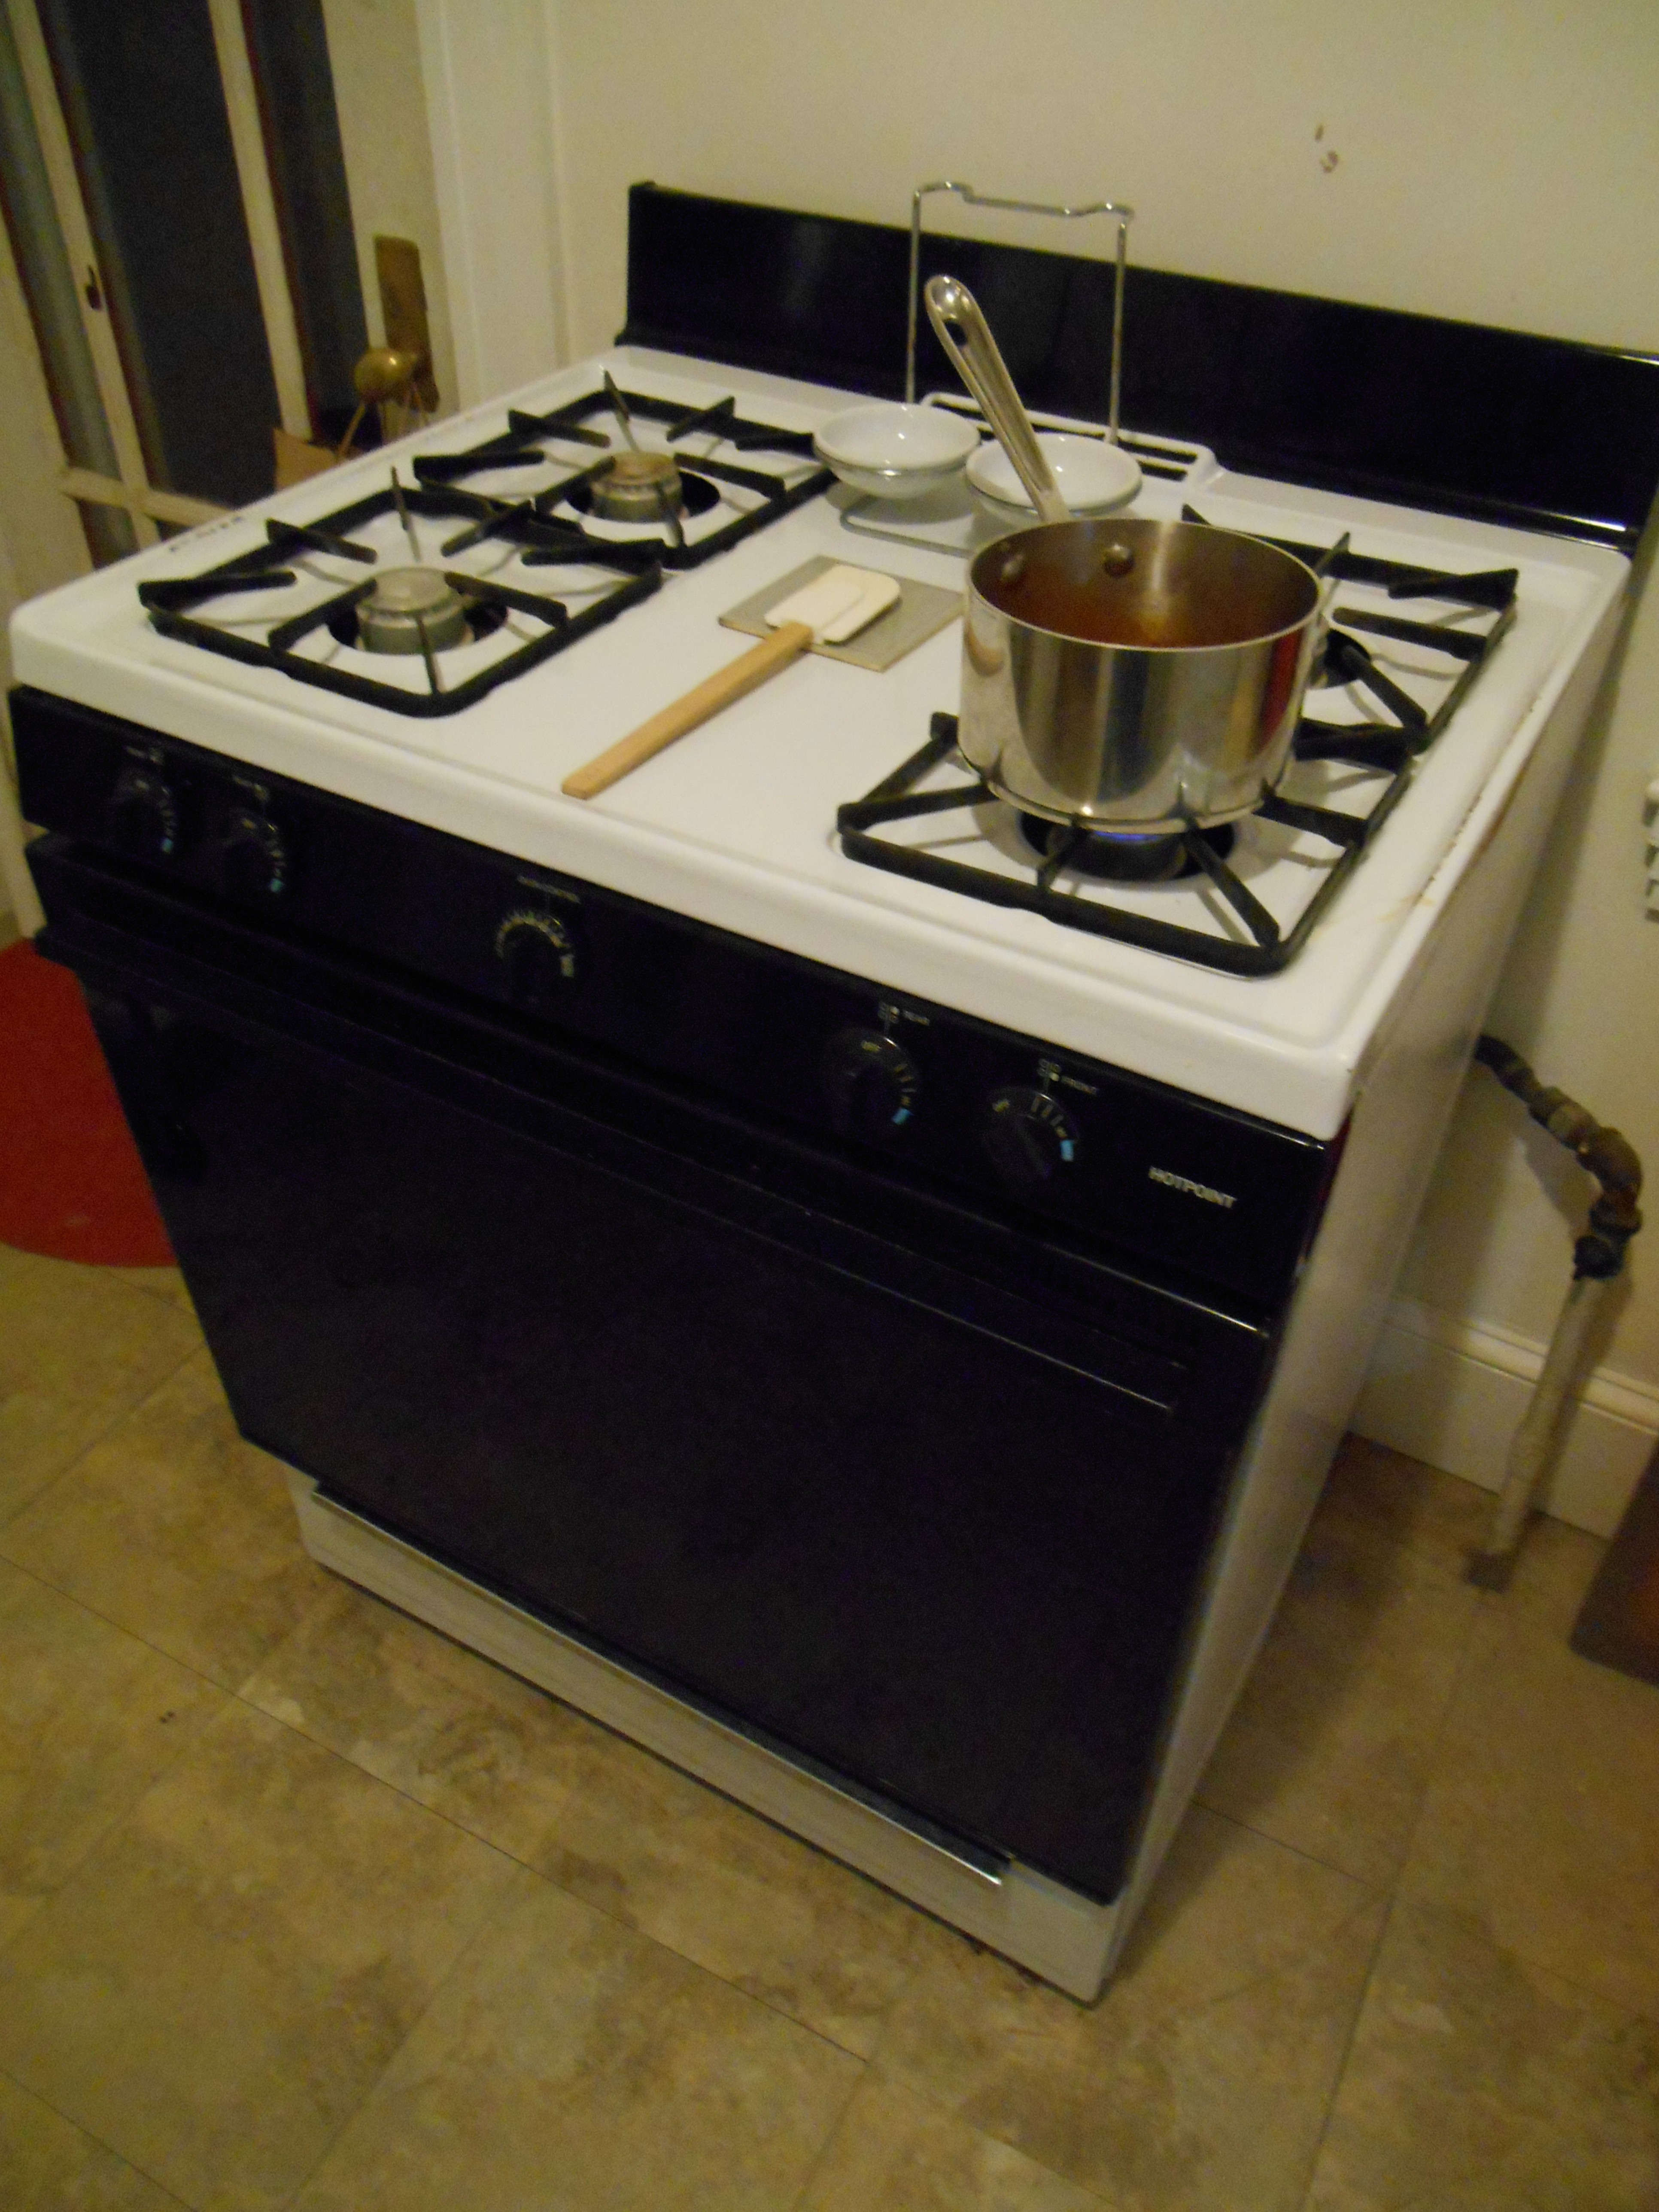 my stove